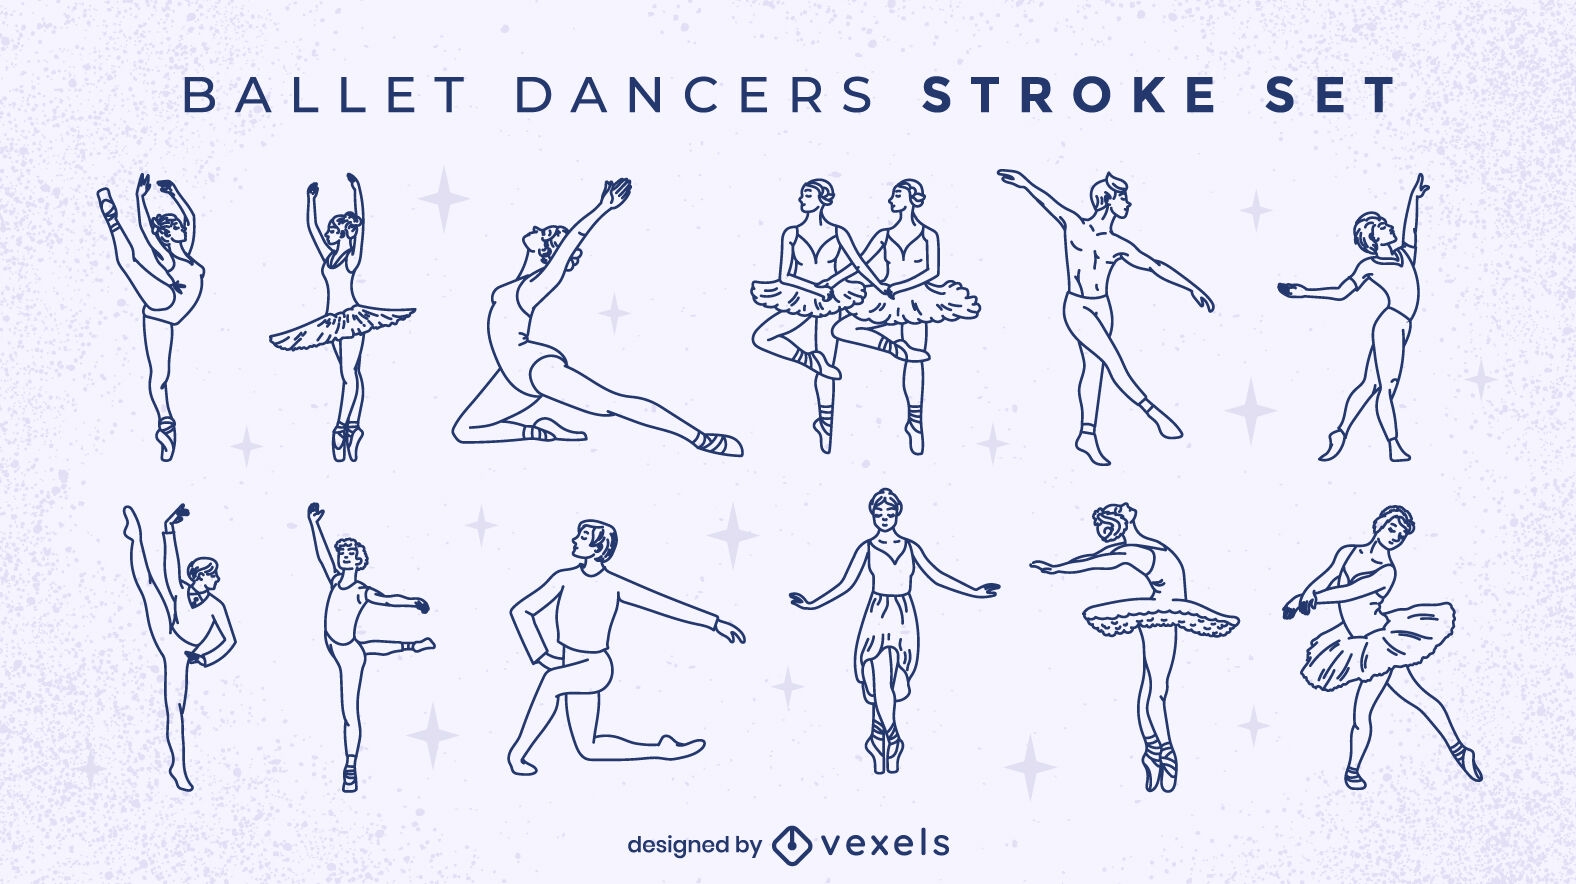 Men and women ballet dancers stroke set